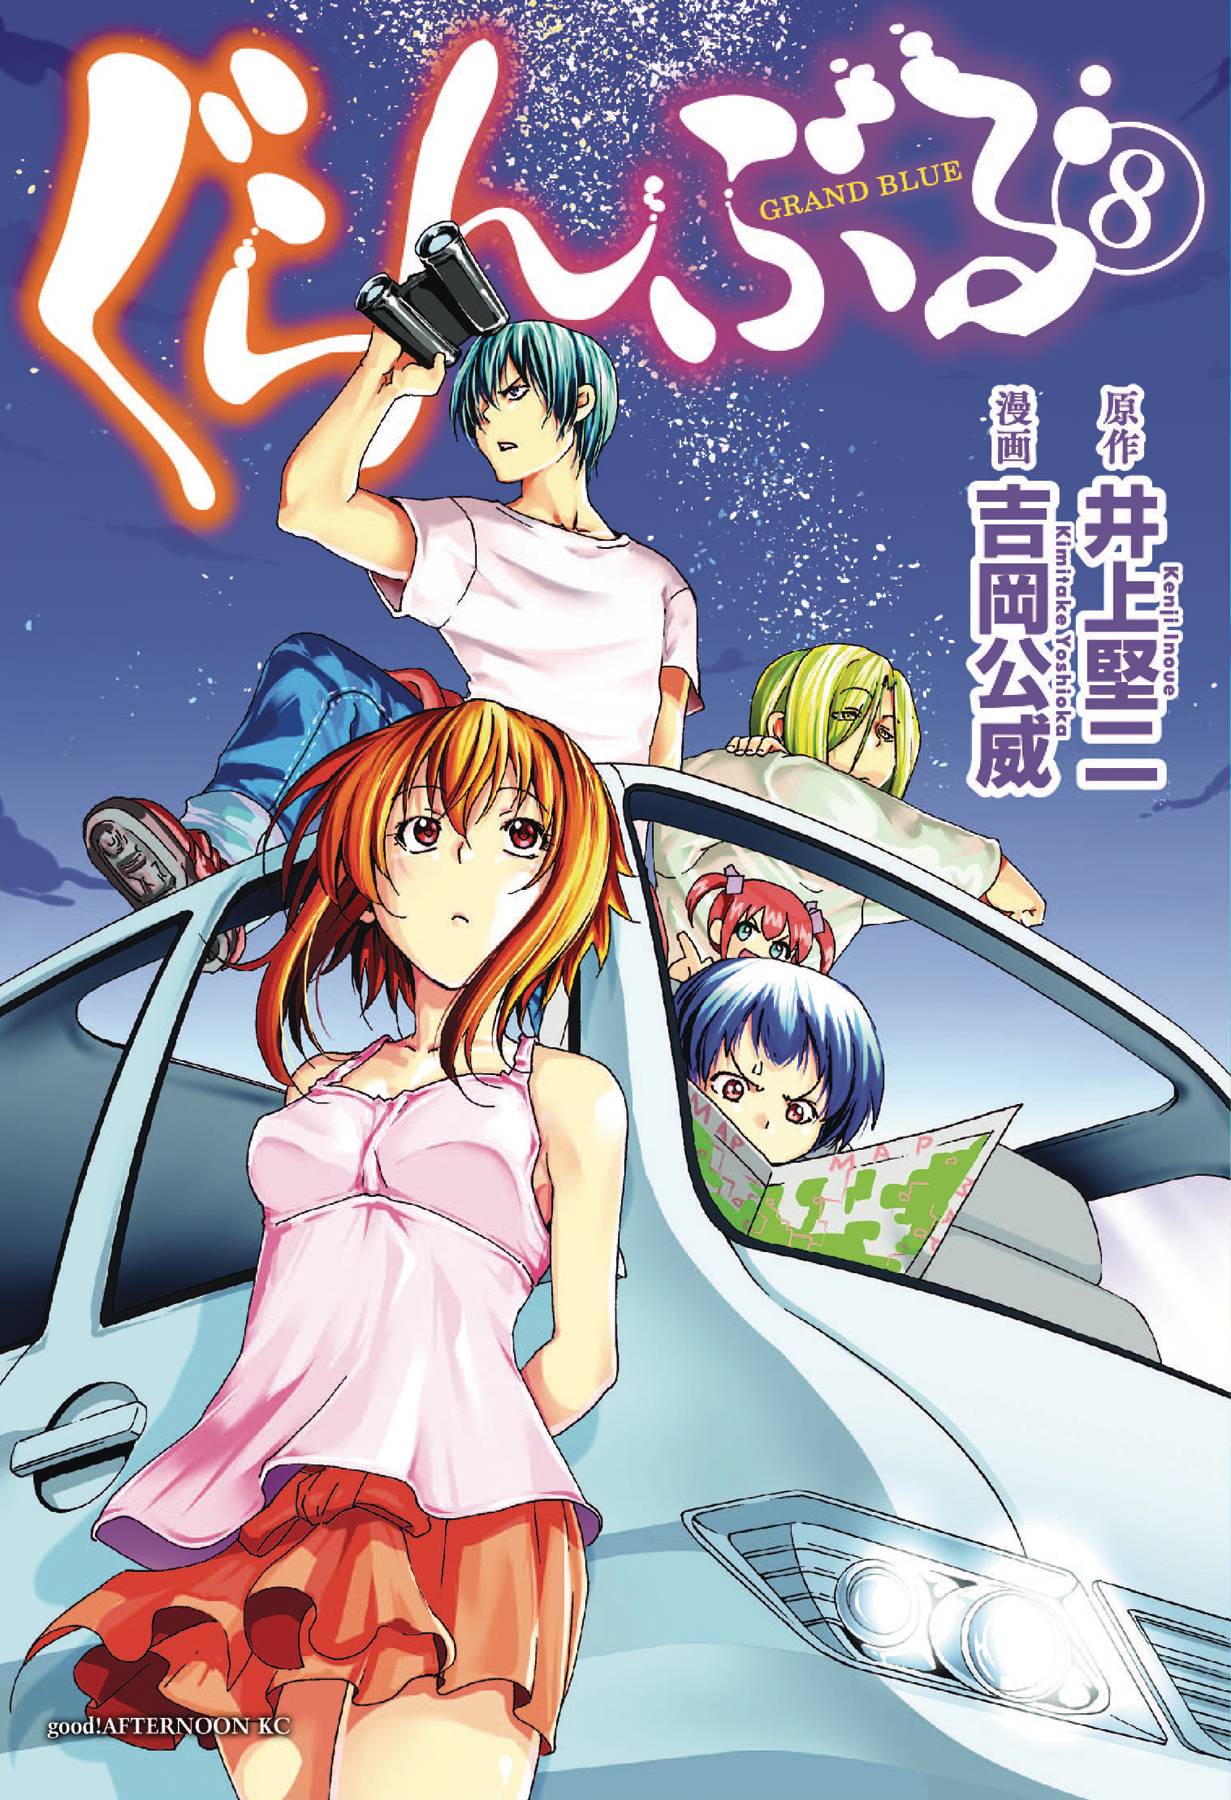 Grand Blue Dreaming Manga Volume 8 (Mature)